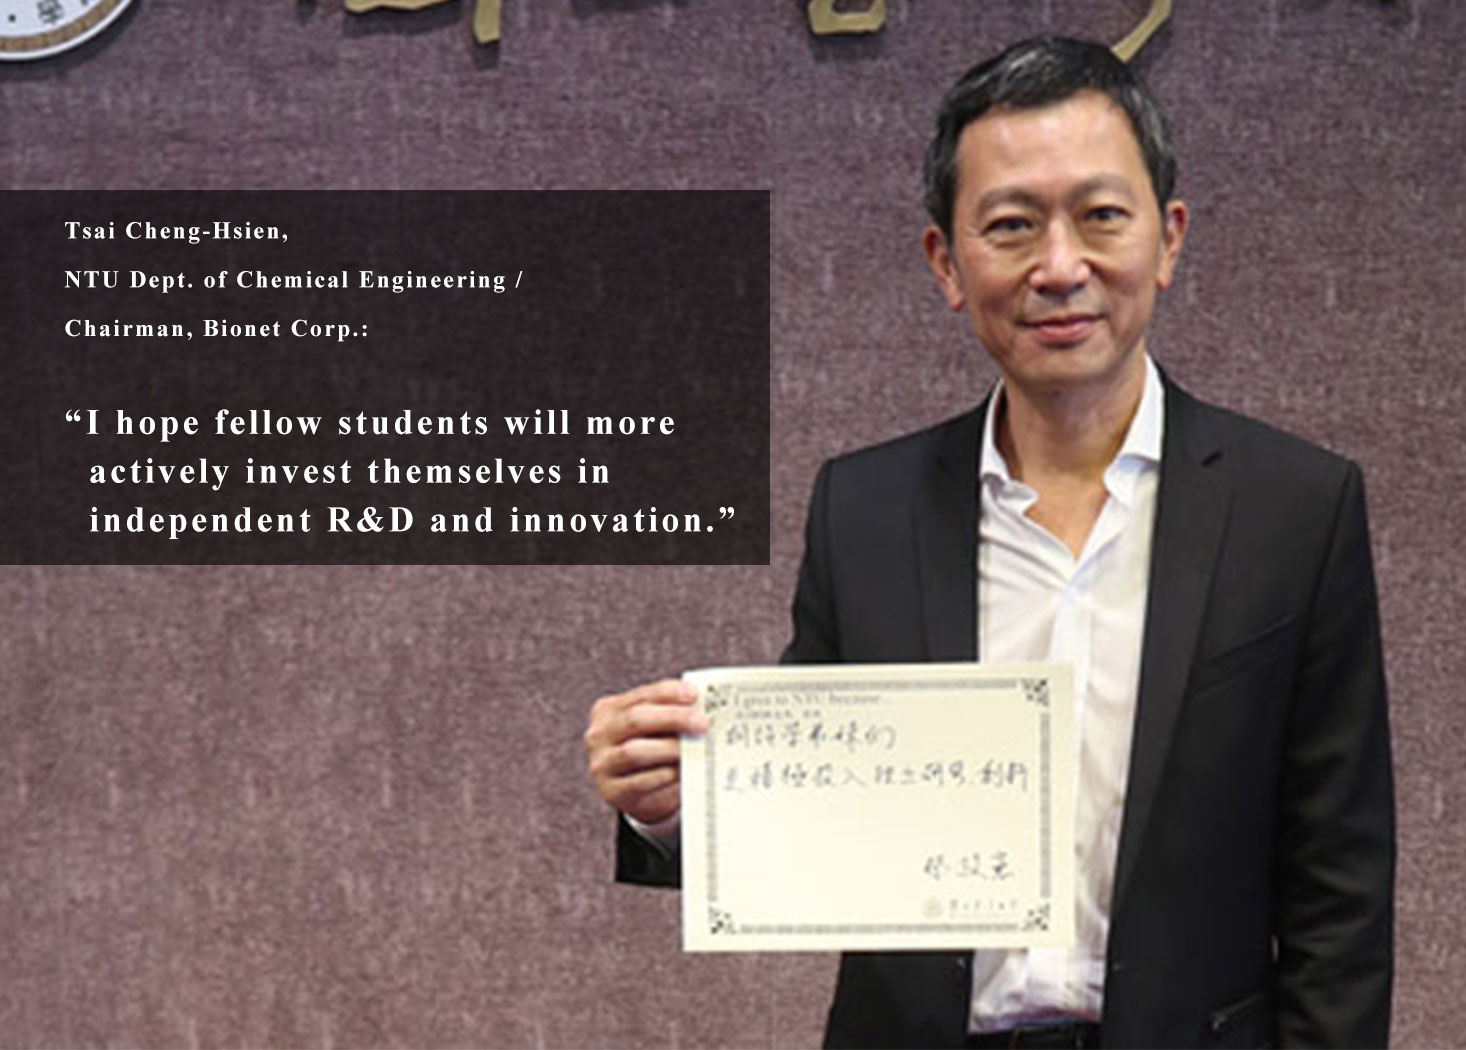 Tsai Cheng-Hsien, NTU Dept. of Chemical Engineering / Chairman, Bionet Corp.